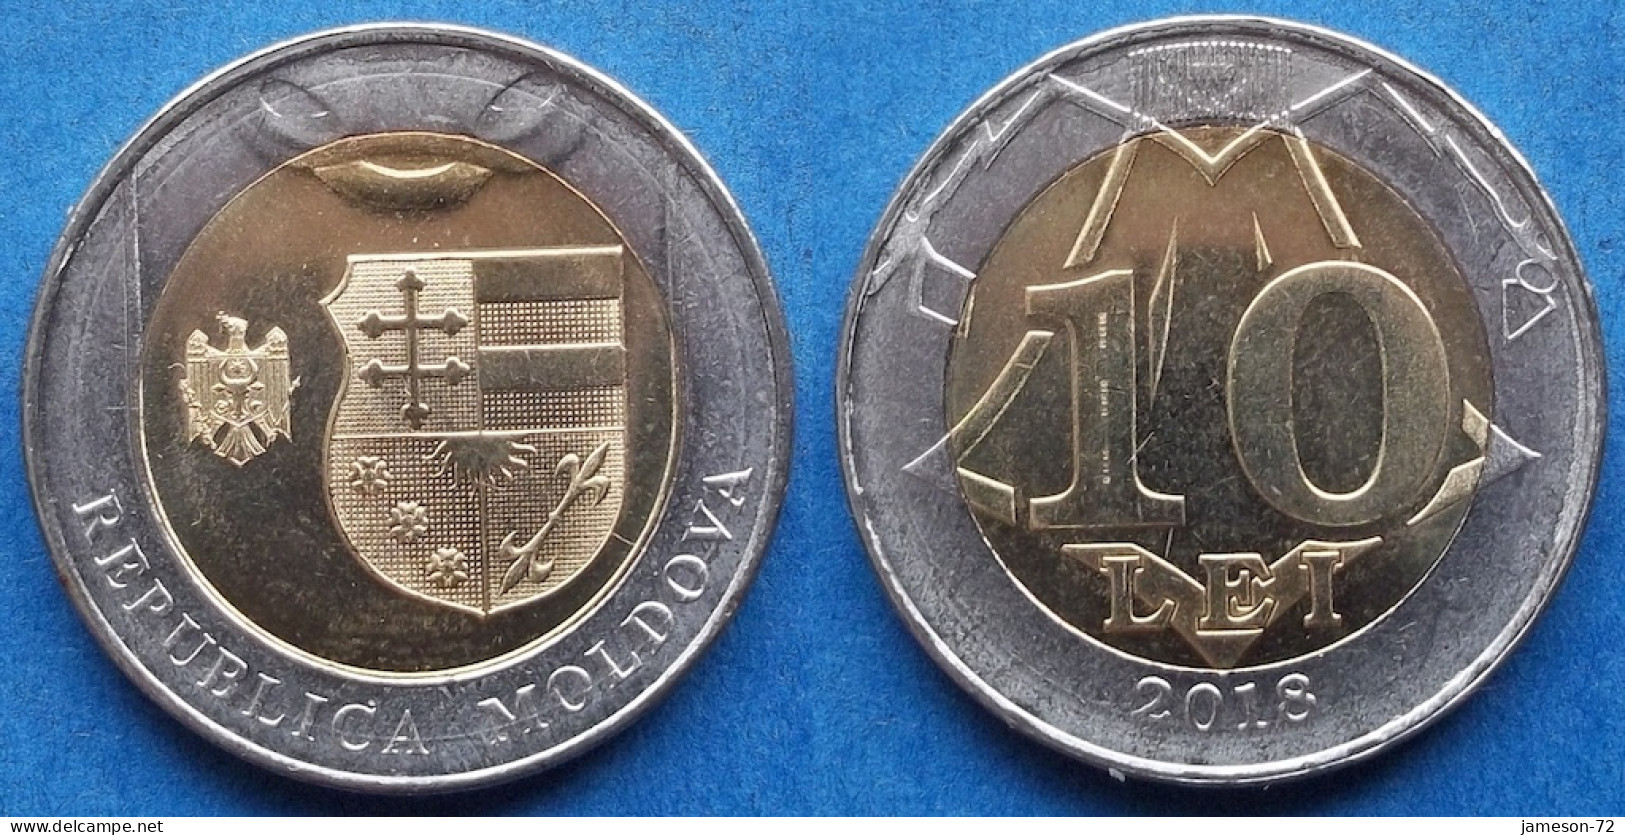 MOLDOVA - set 4 coins: 1, 2, 5, 10 lei 2018 "Coat of Arms of the Moldavian Pri" KM# 10 Republic (1991) - Edelweiss Coins